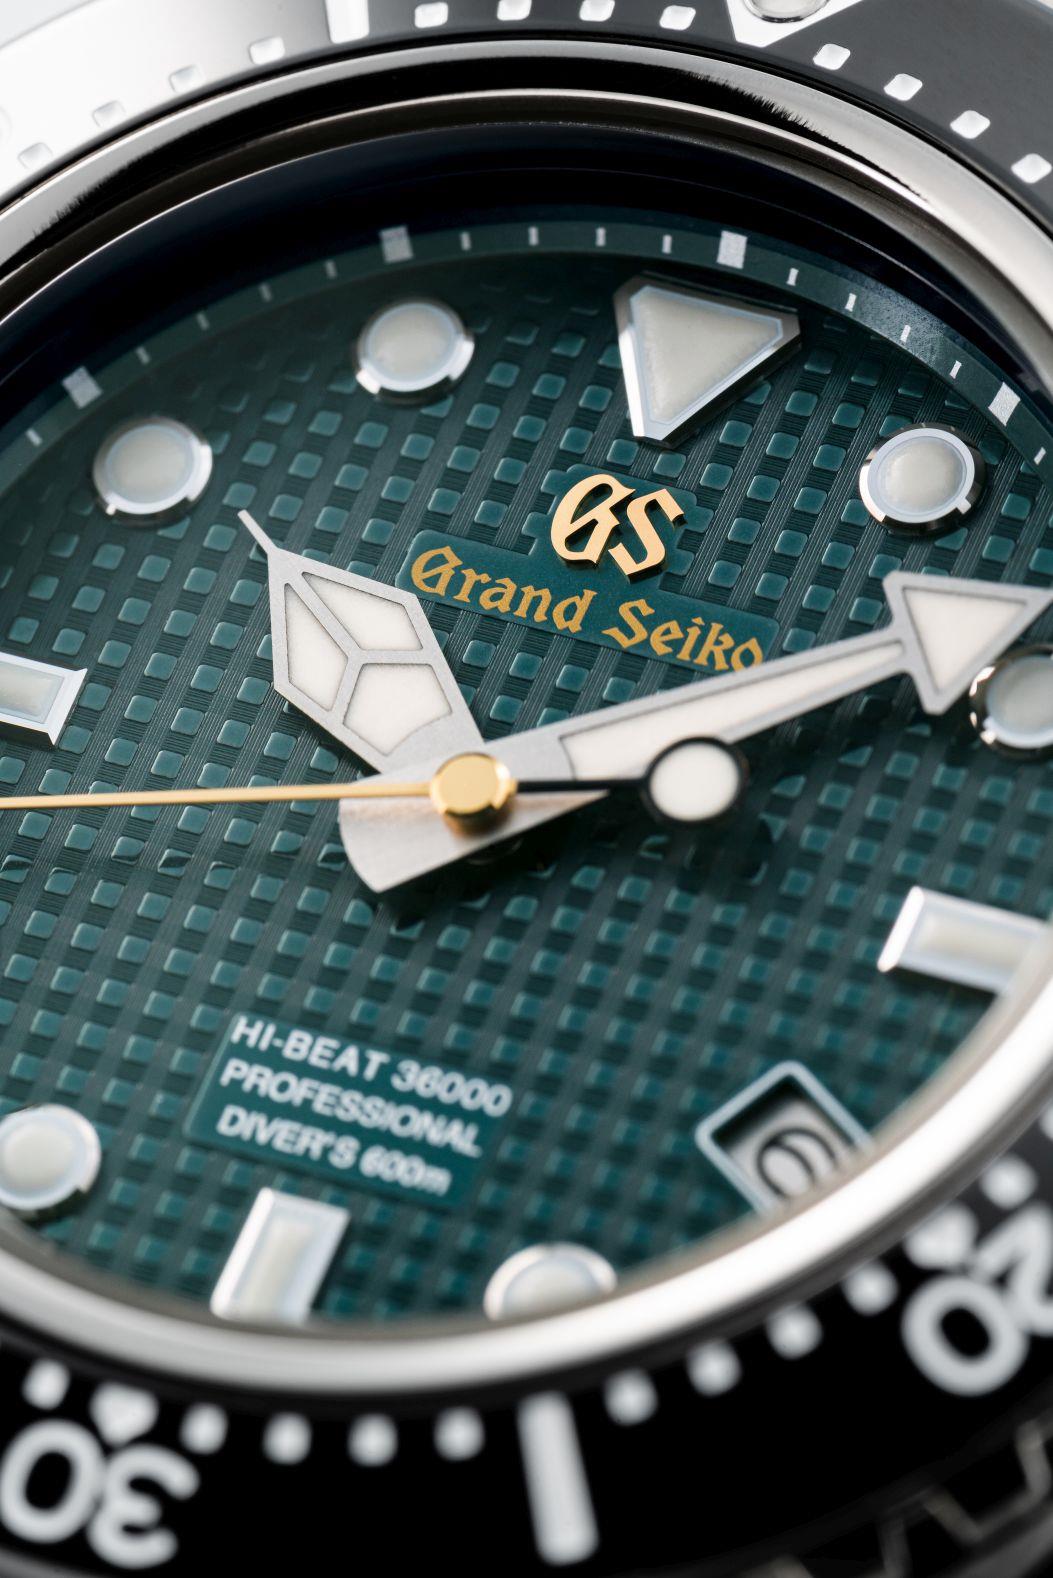 Grand Seiko | Oriental Watch Company Official Website